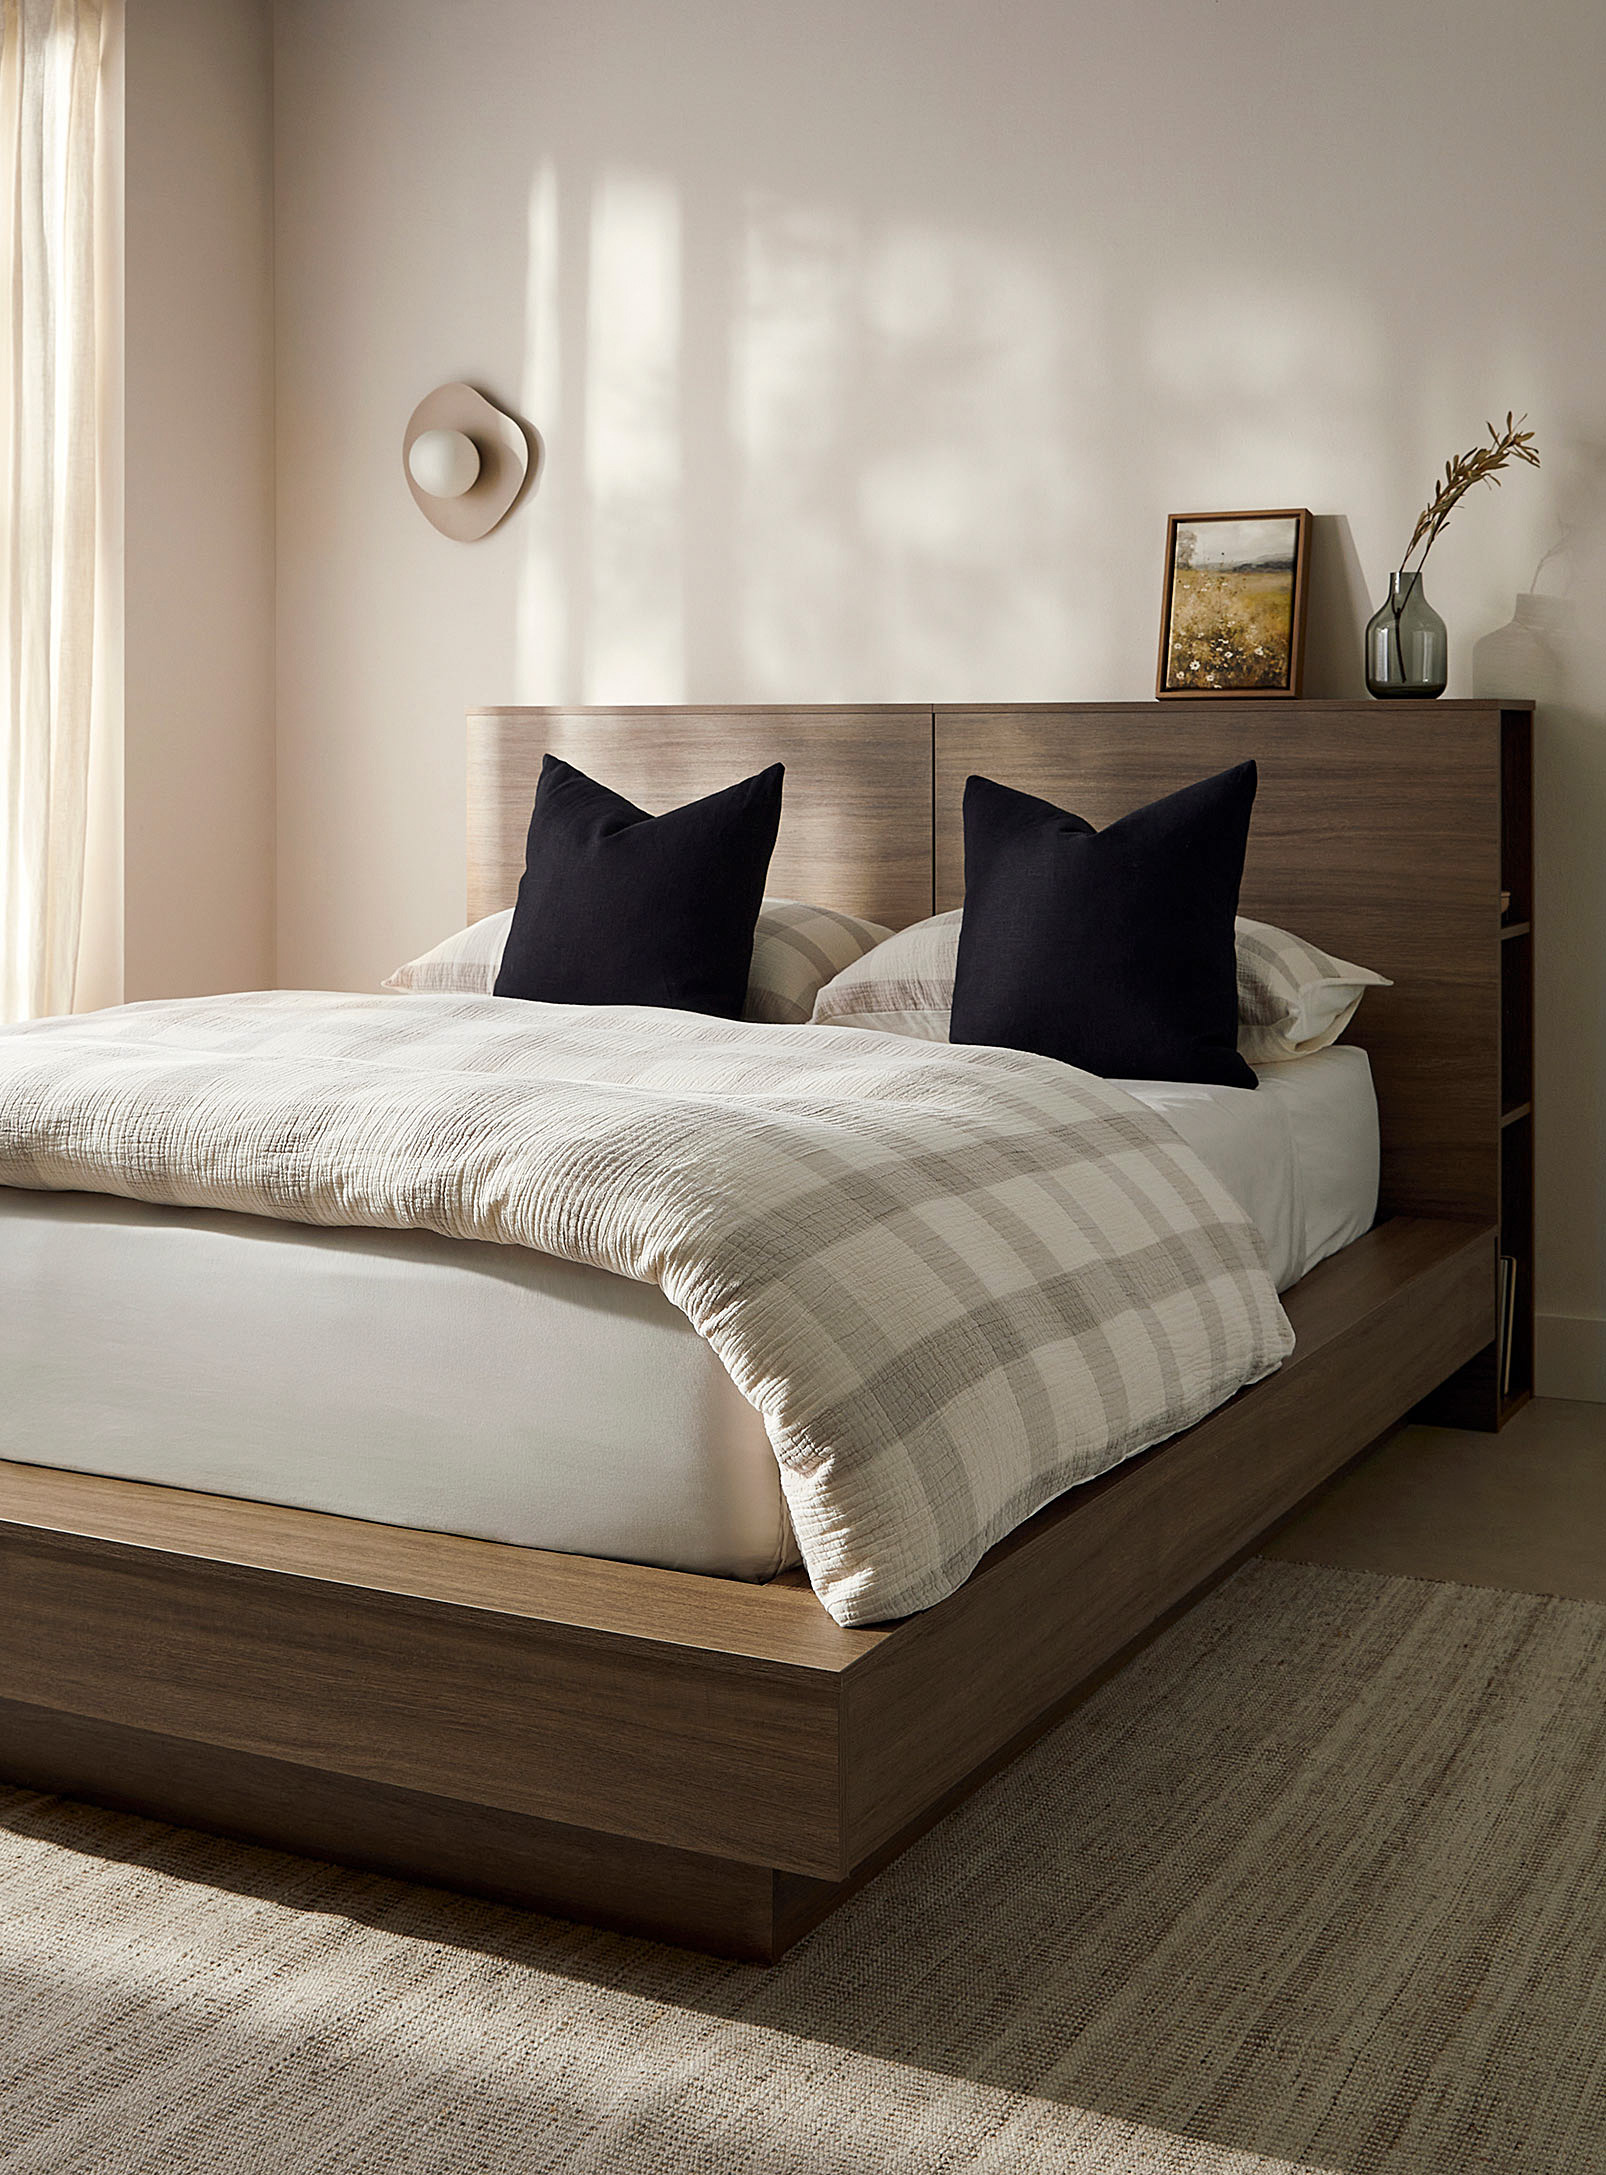 Simons Maison Blond Oak Platform Bed Frame Queen Size In Neutral